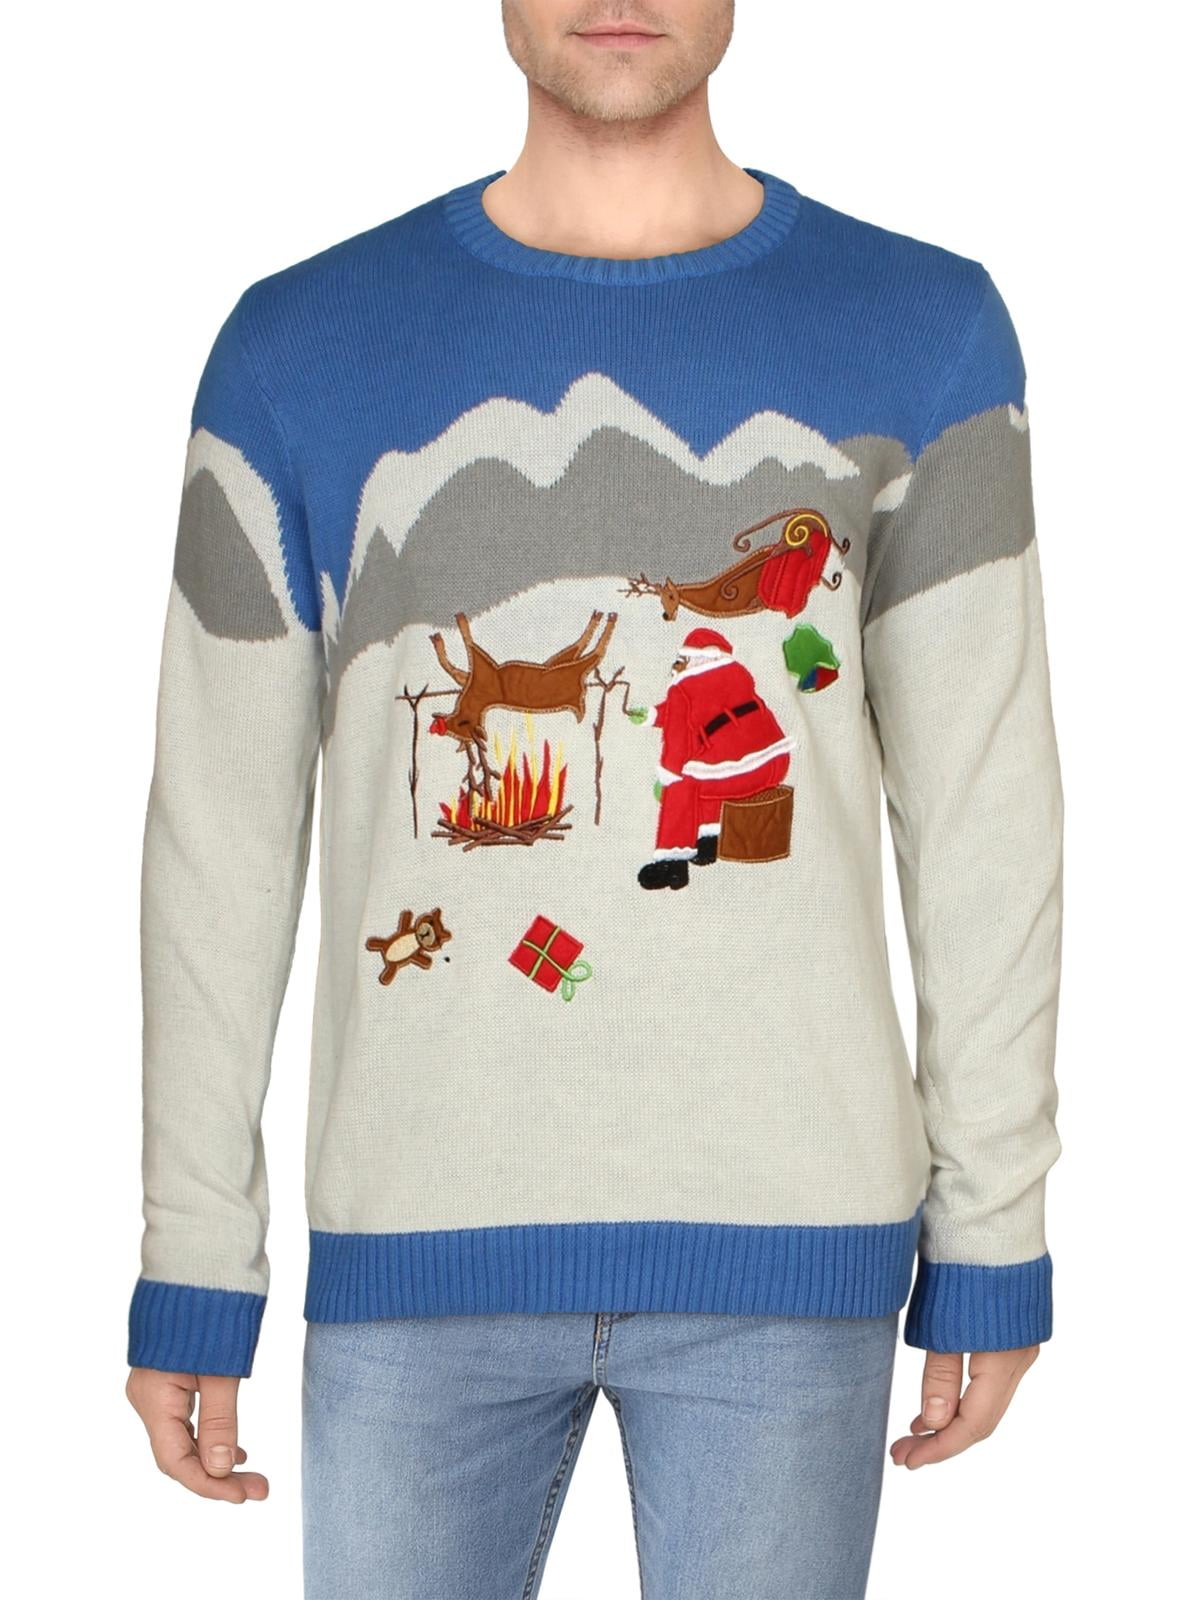 Unisex Adult Novelty Reindeer Fun Xmas Festive Christmas Sweatshirt Jumper Blue 